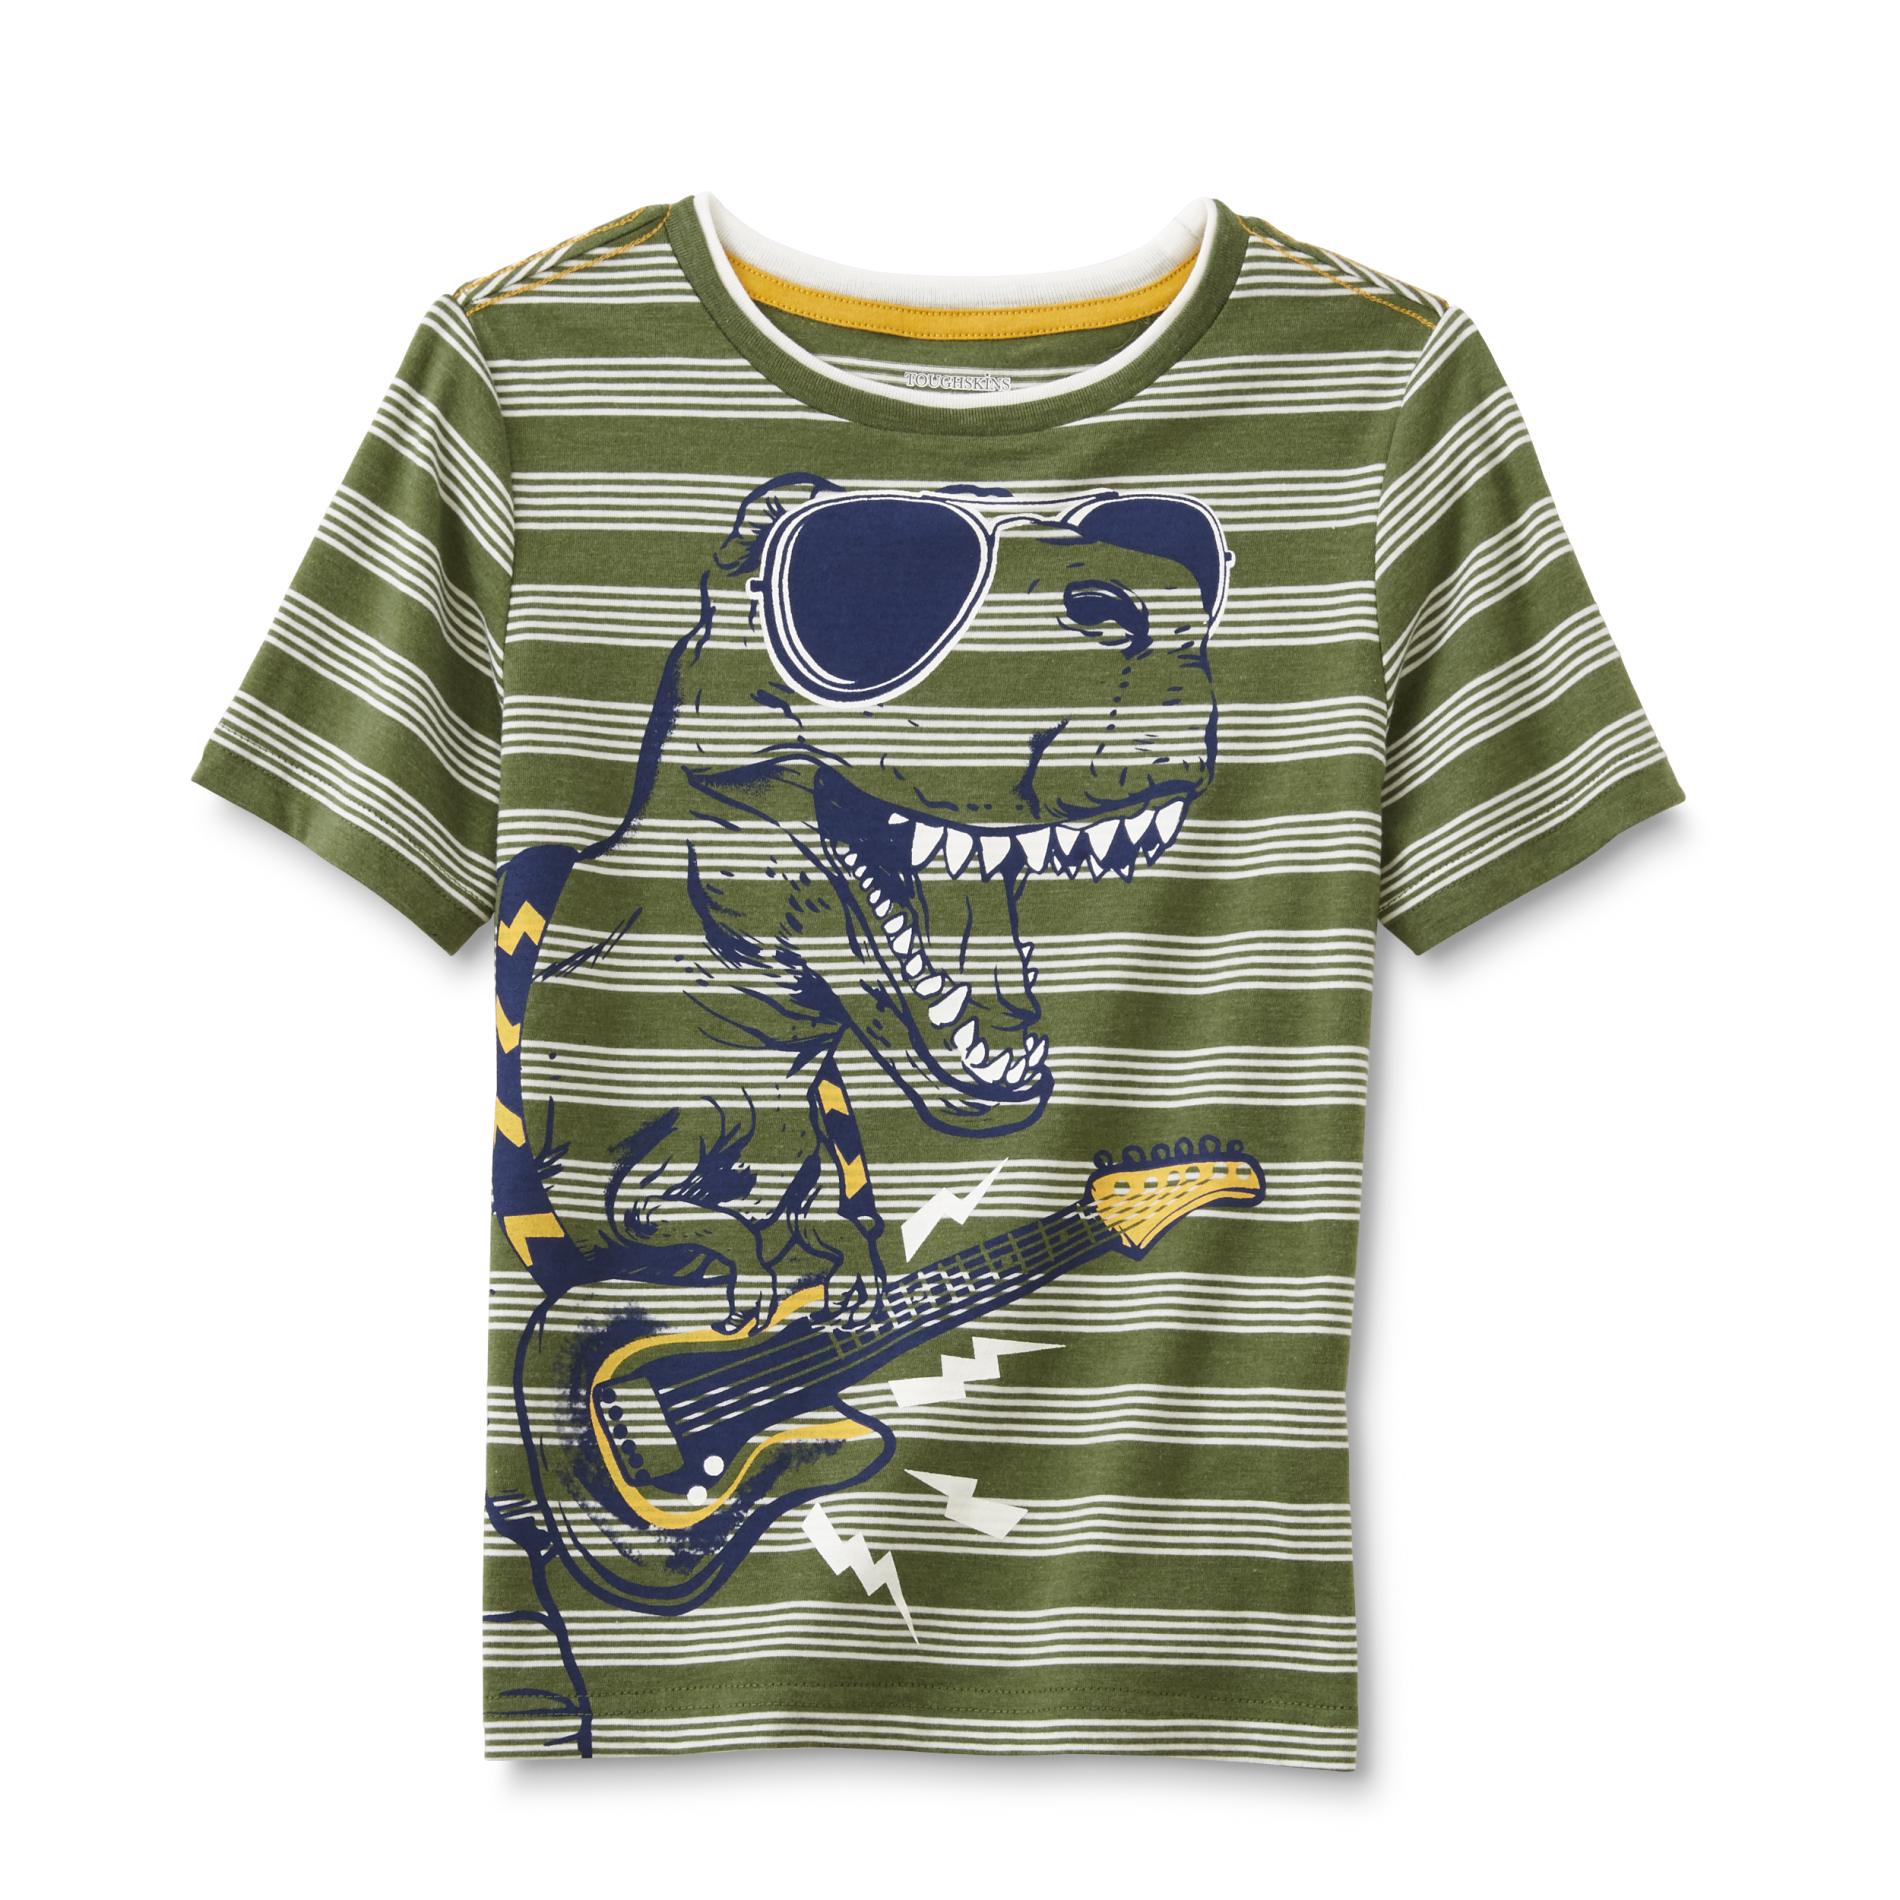 Toughskins Boy's Graphic T-Shirt - Dinosaur